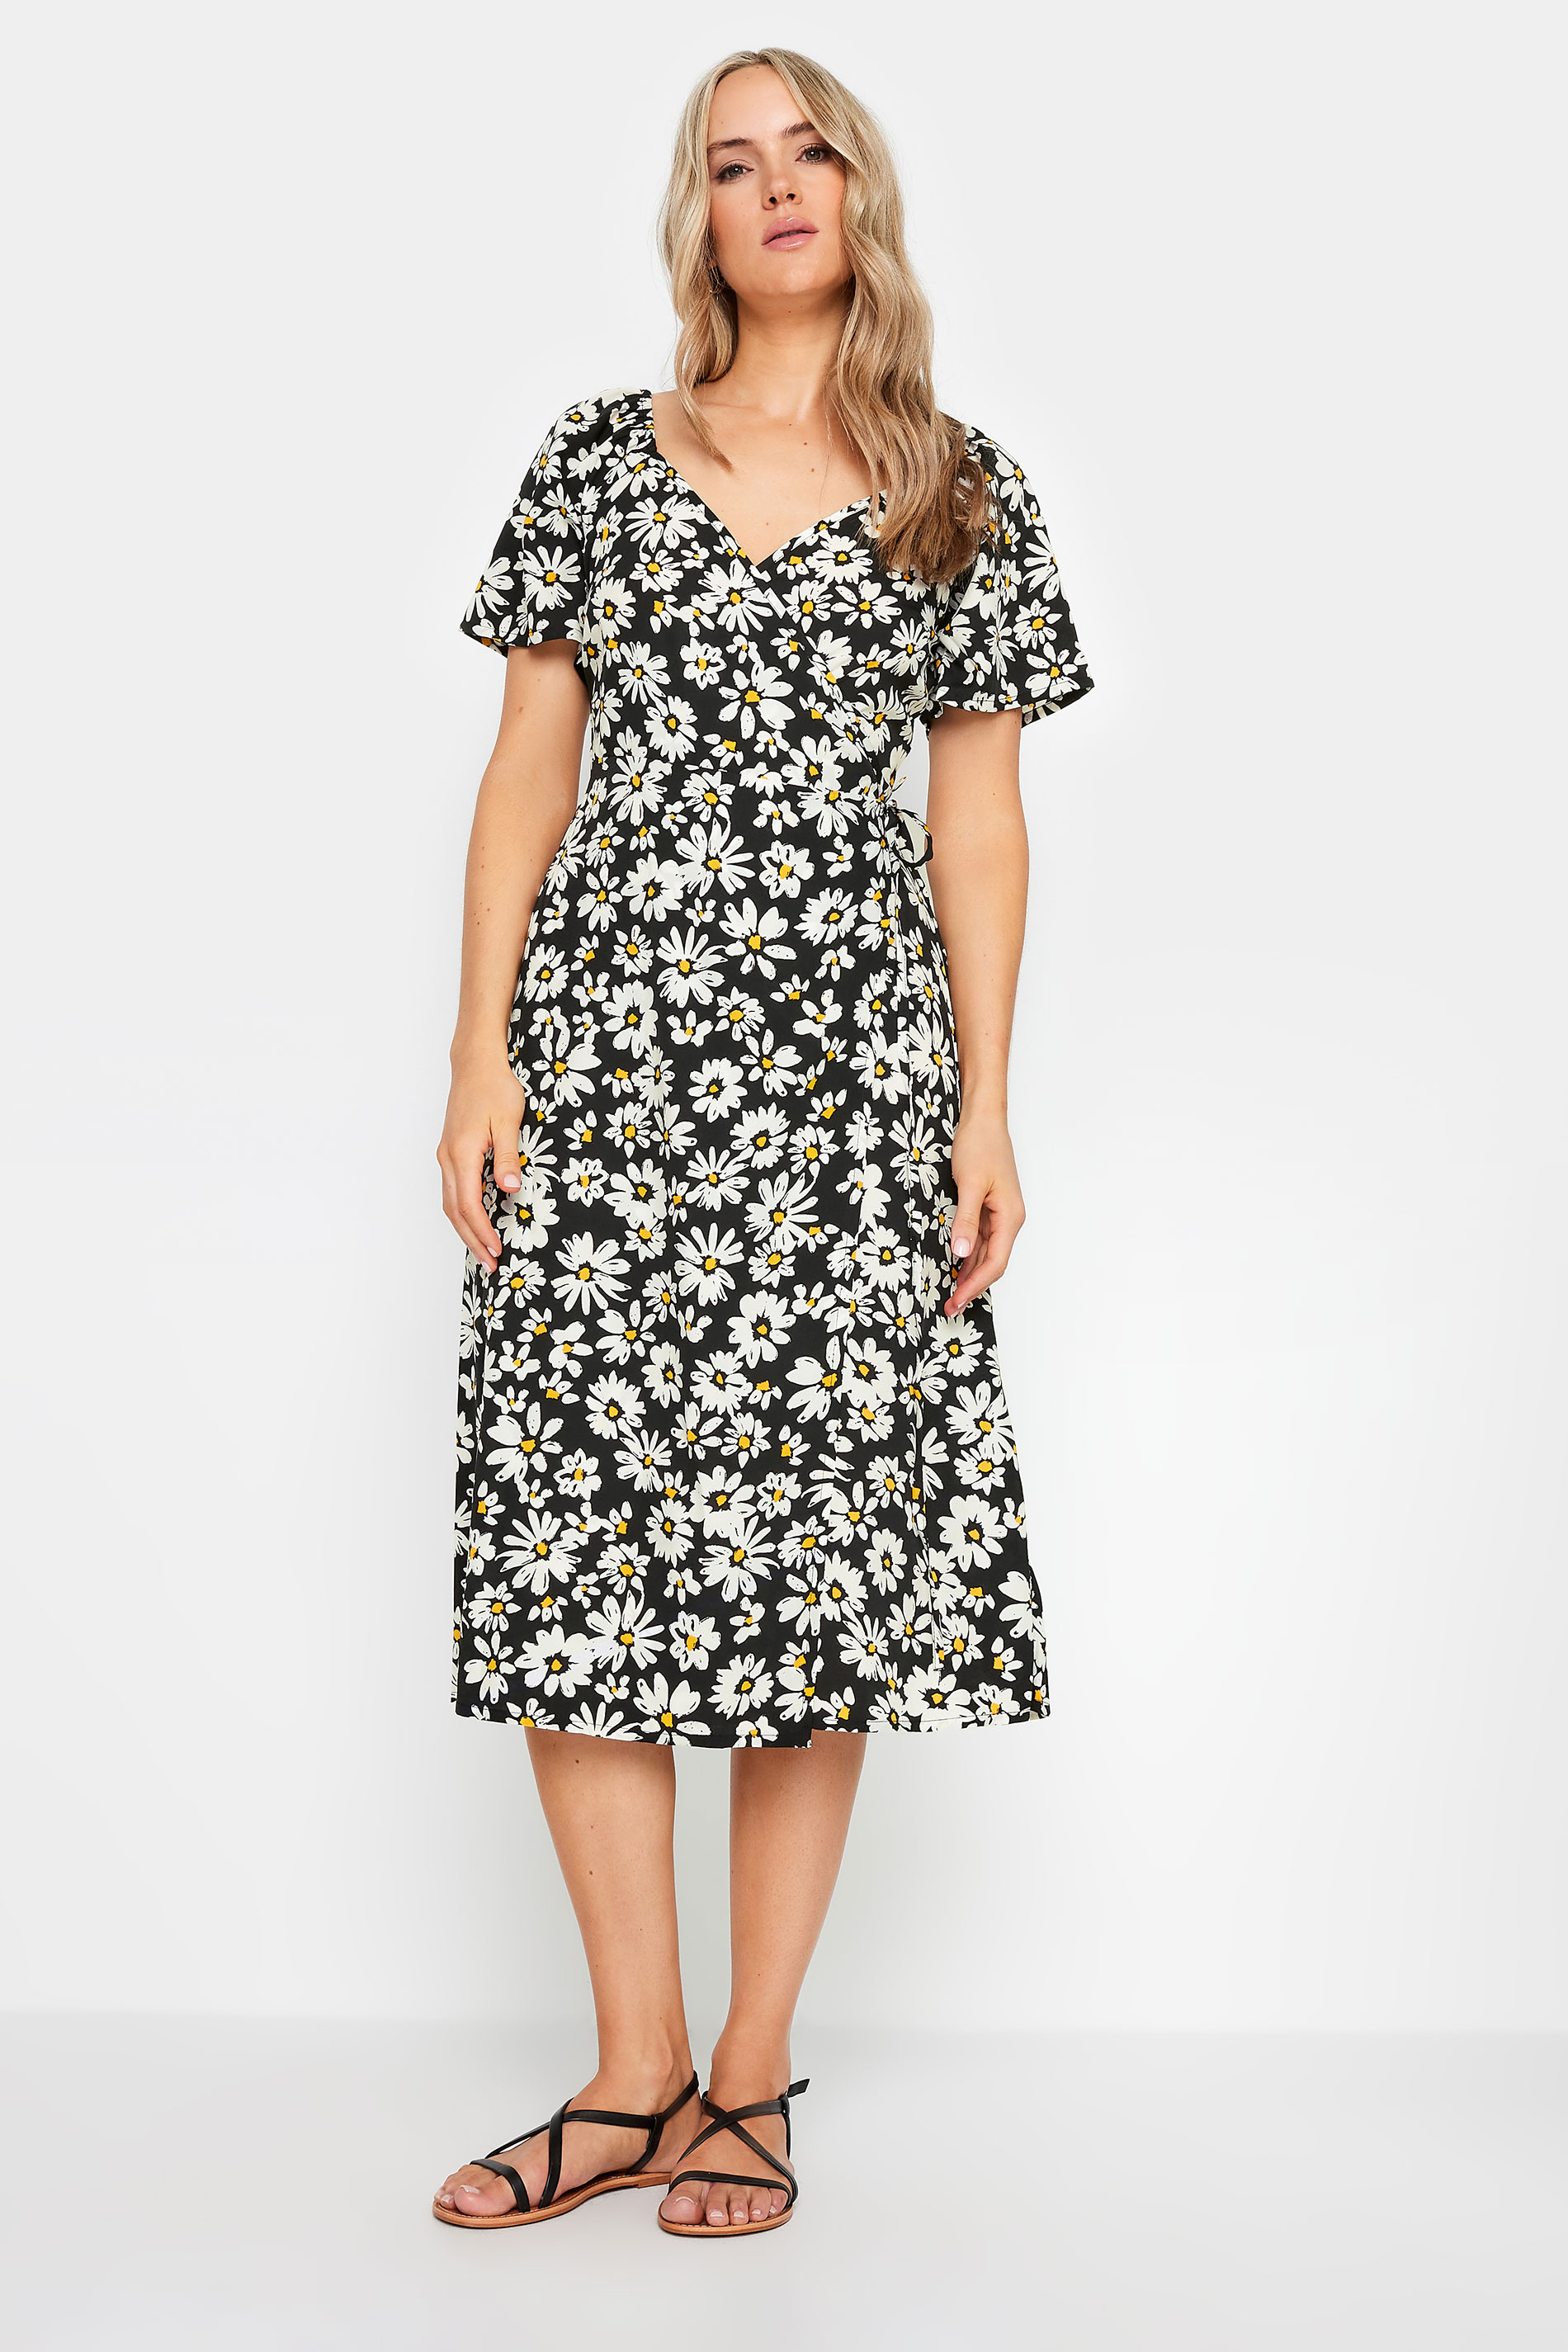 LTS Tall Women's Black Daisy Print Wrap Dress | Long Tall Sally 2